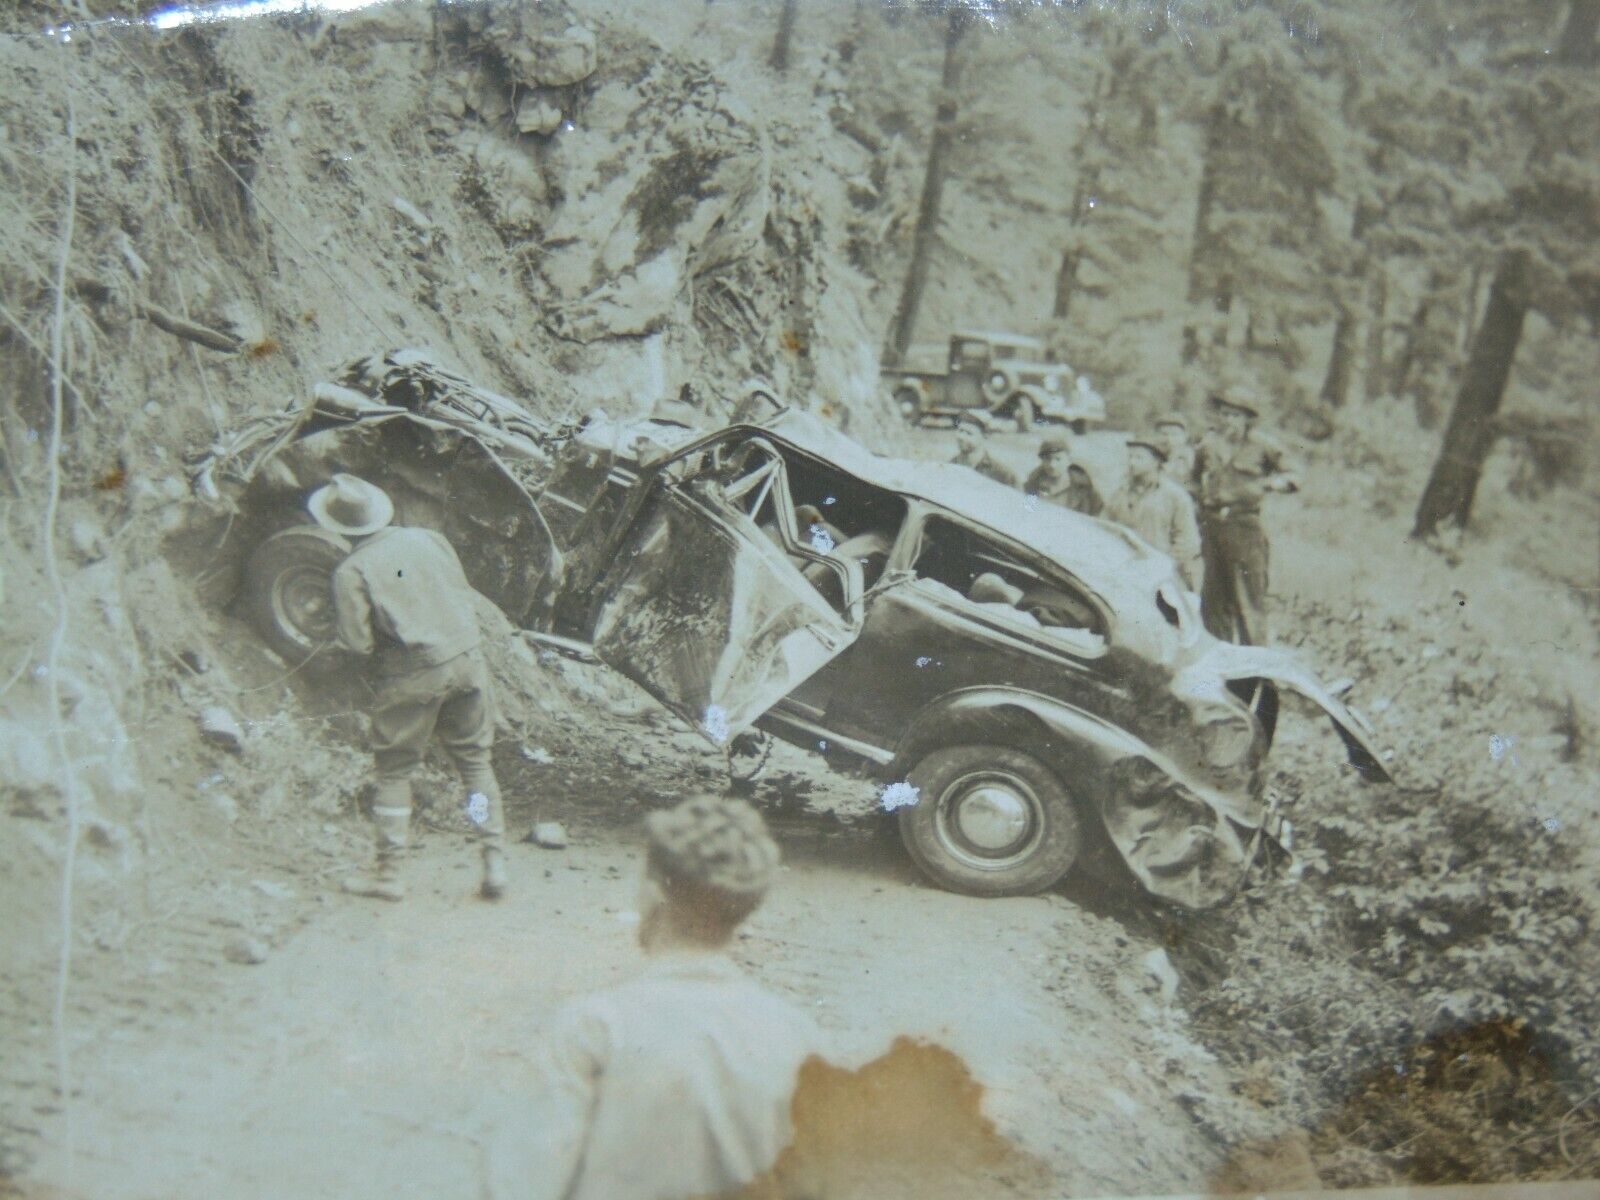 ORIGINAL CIRCA 1940 PHOTOGRAPH OF AUTOMOBILE ACCIDENT